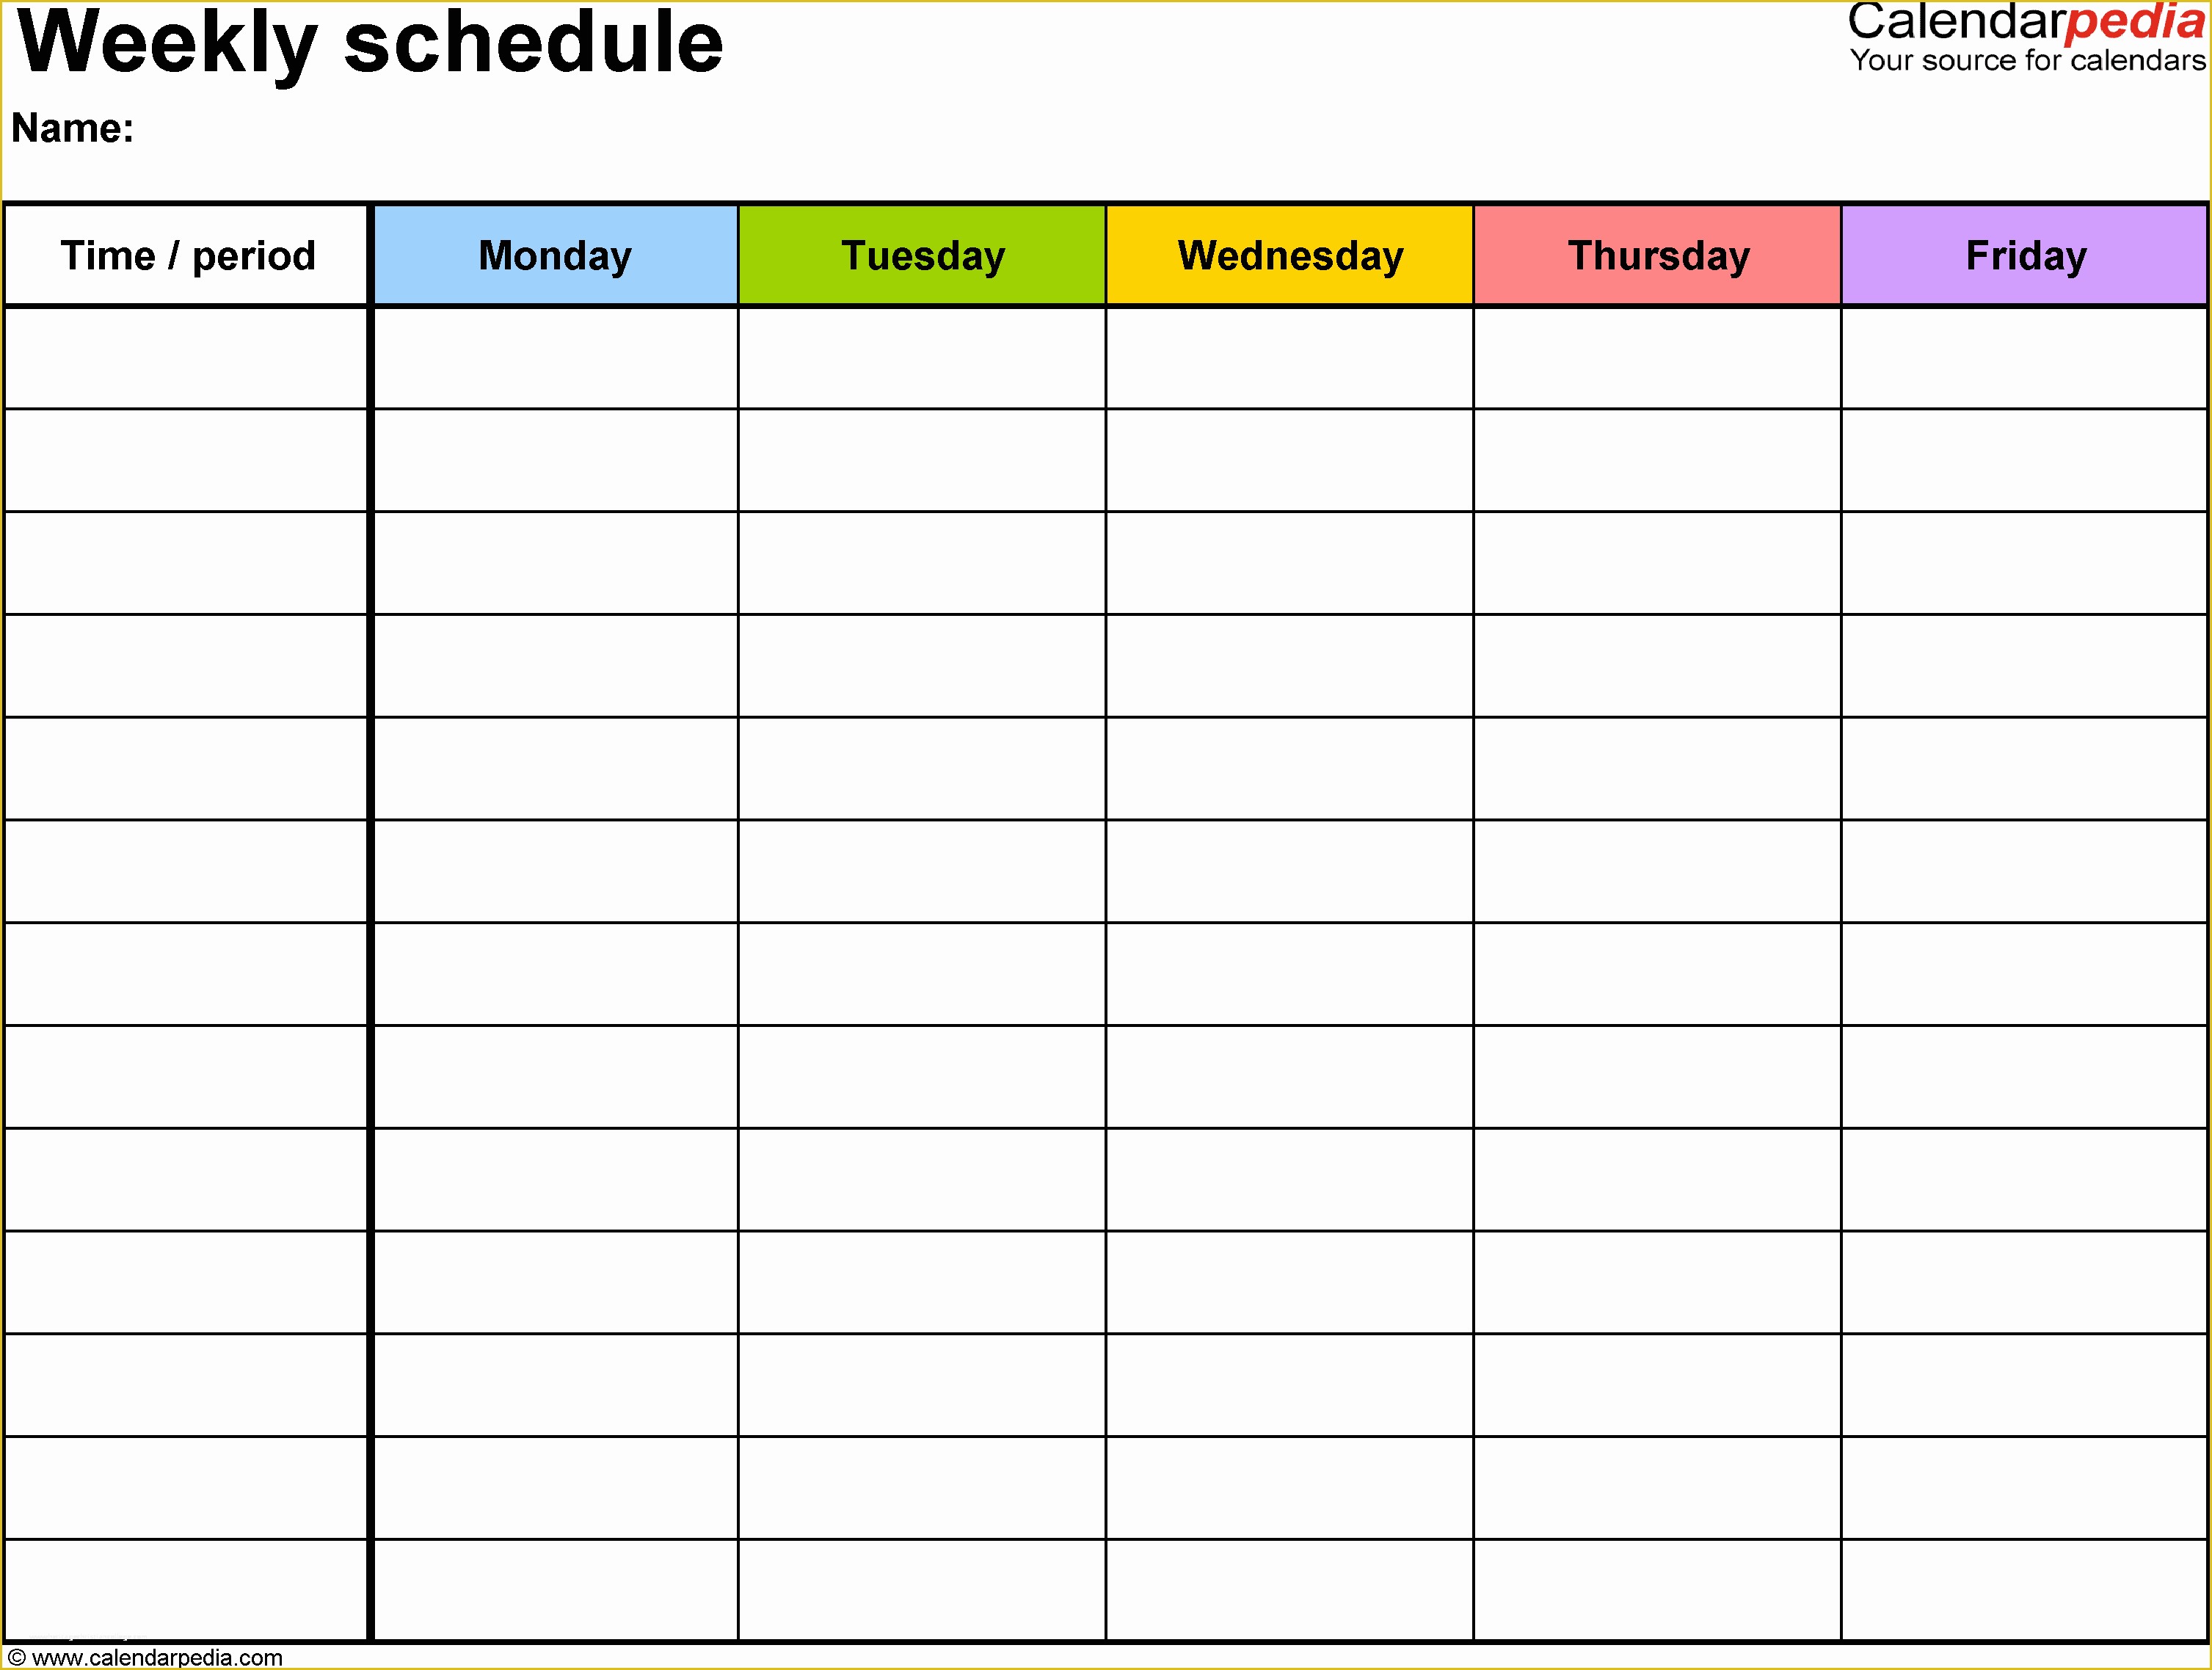 Free Online Schedule Template Of Weekly Calendar Pdf